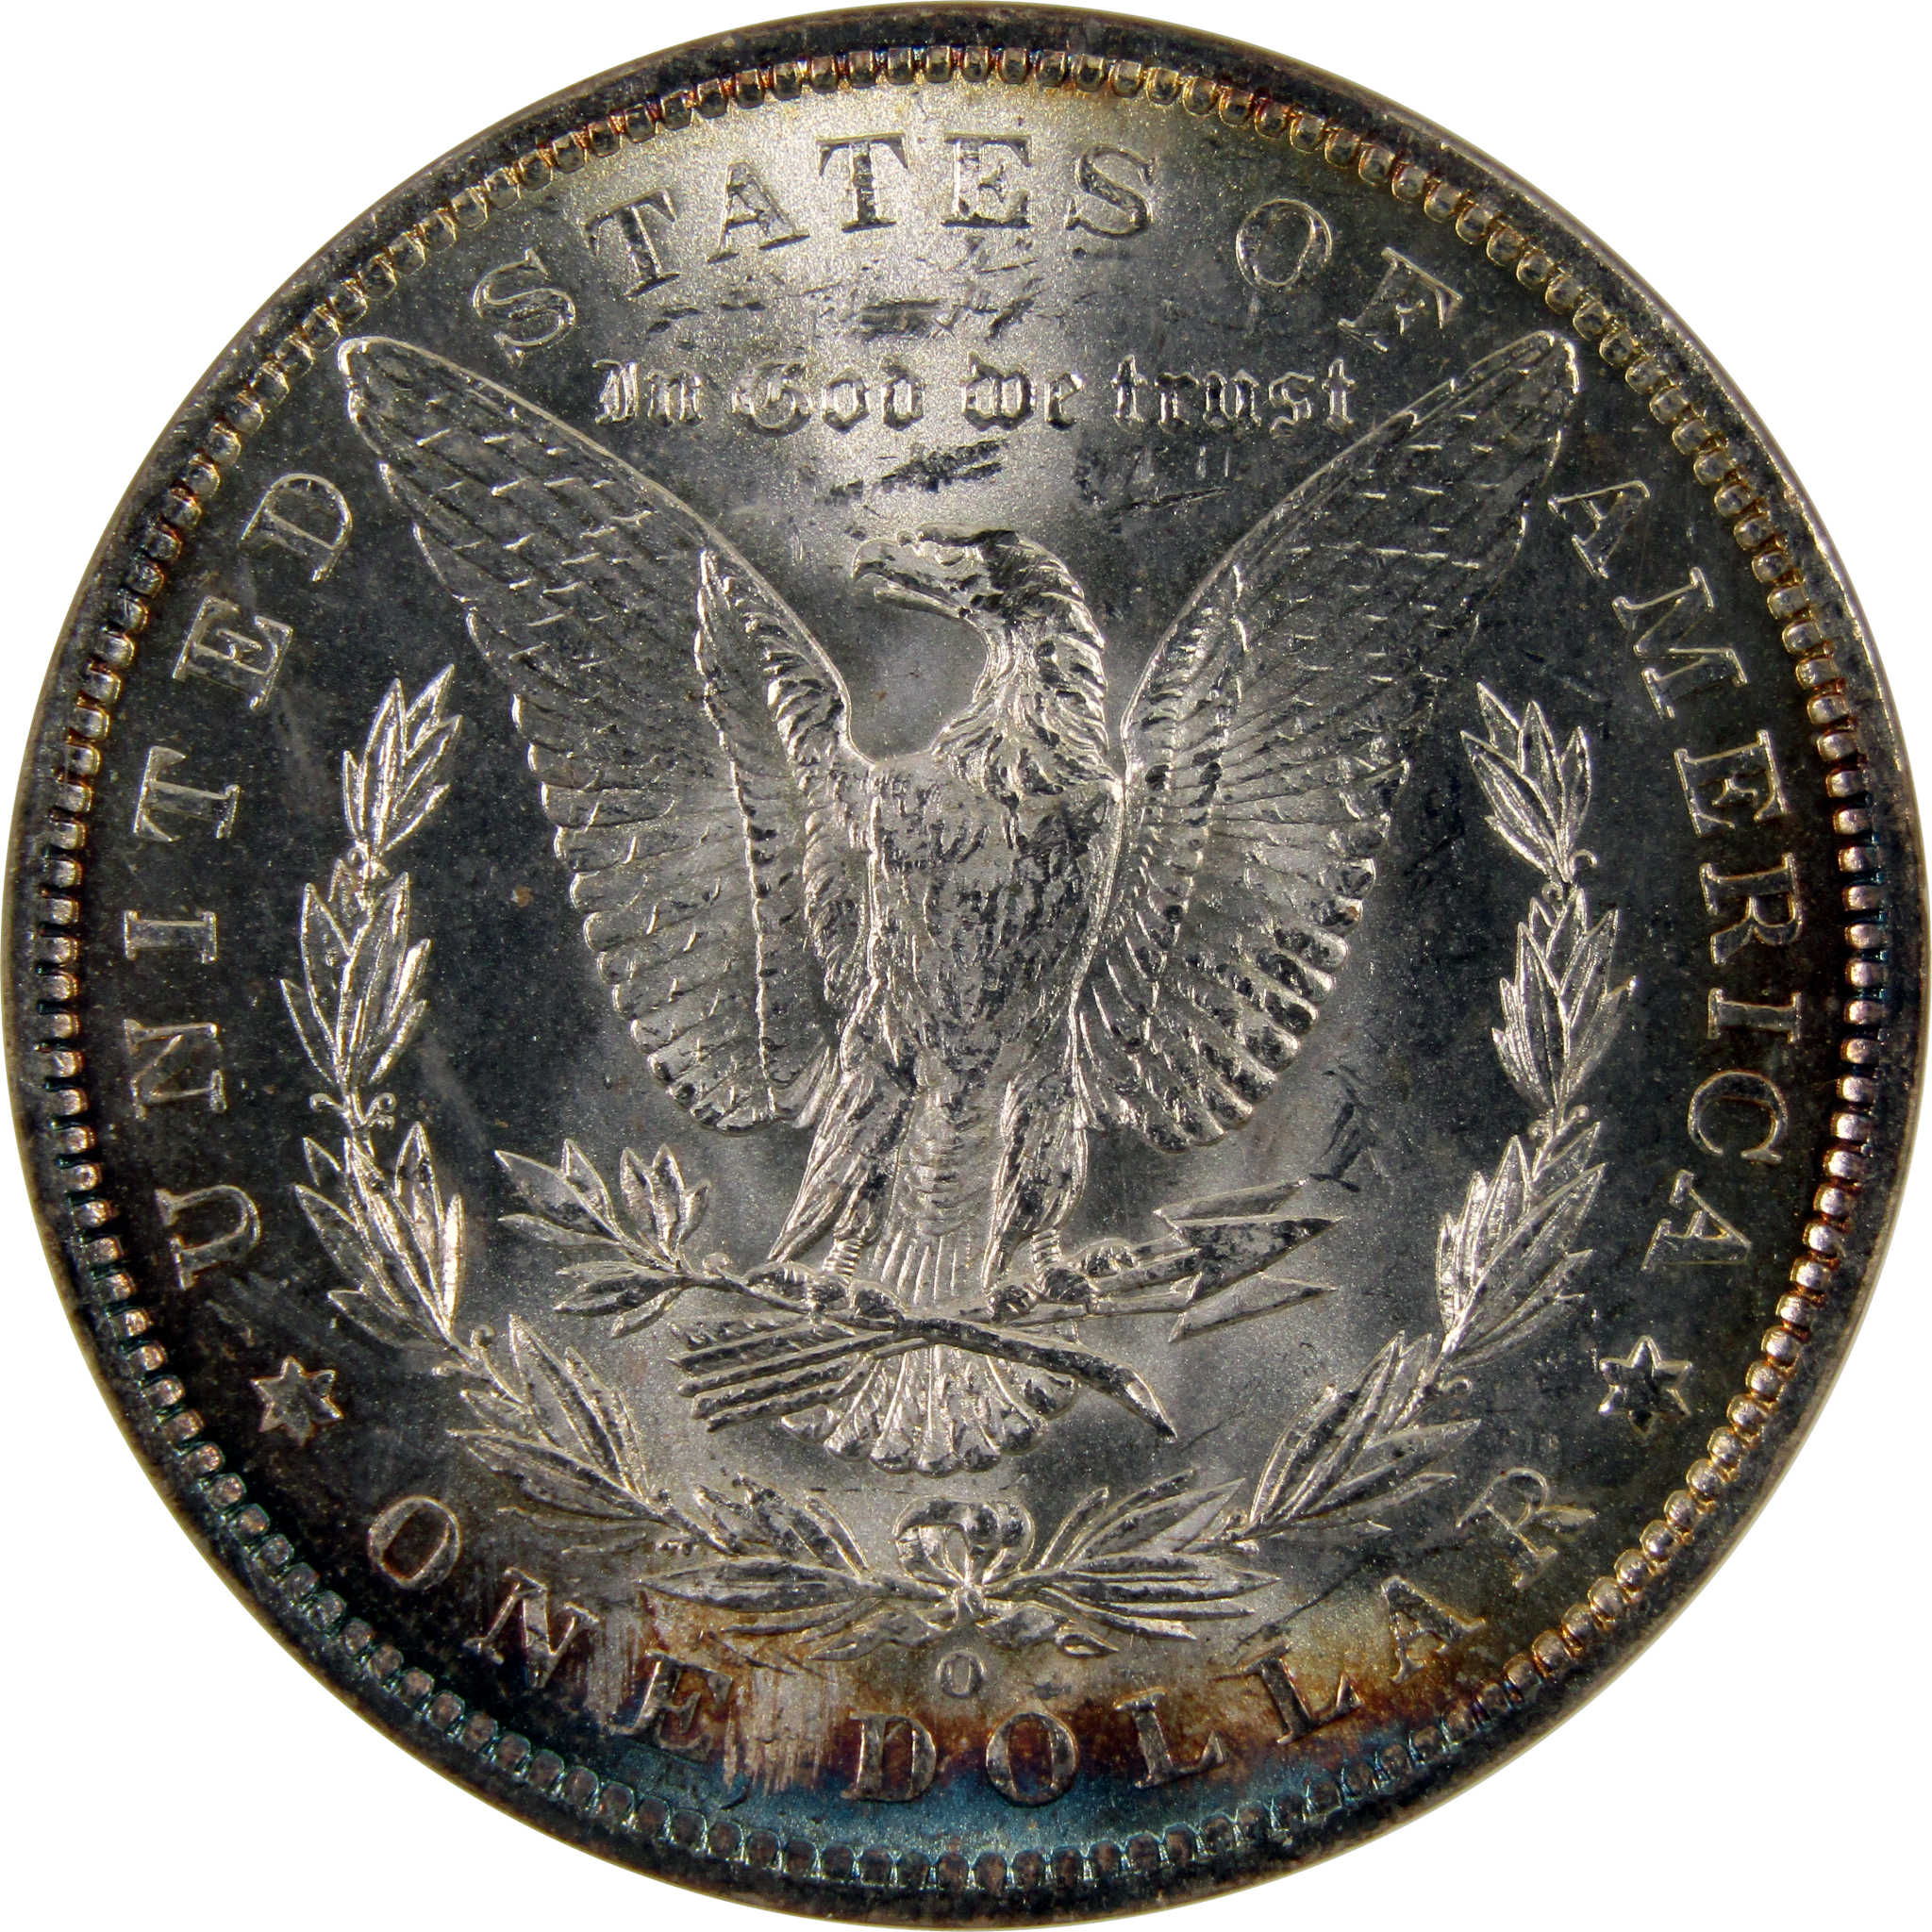 1889 O Morgan Dollar MS 63 NGC 90% Silver $1 Uncirculated SKU:I9134 - Morgan coin - Morgan silver dollar - Morgan silver dollar for sale - Profile Coins &amp; Collectibles